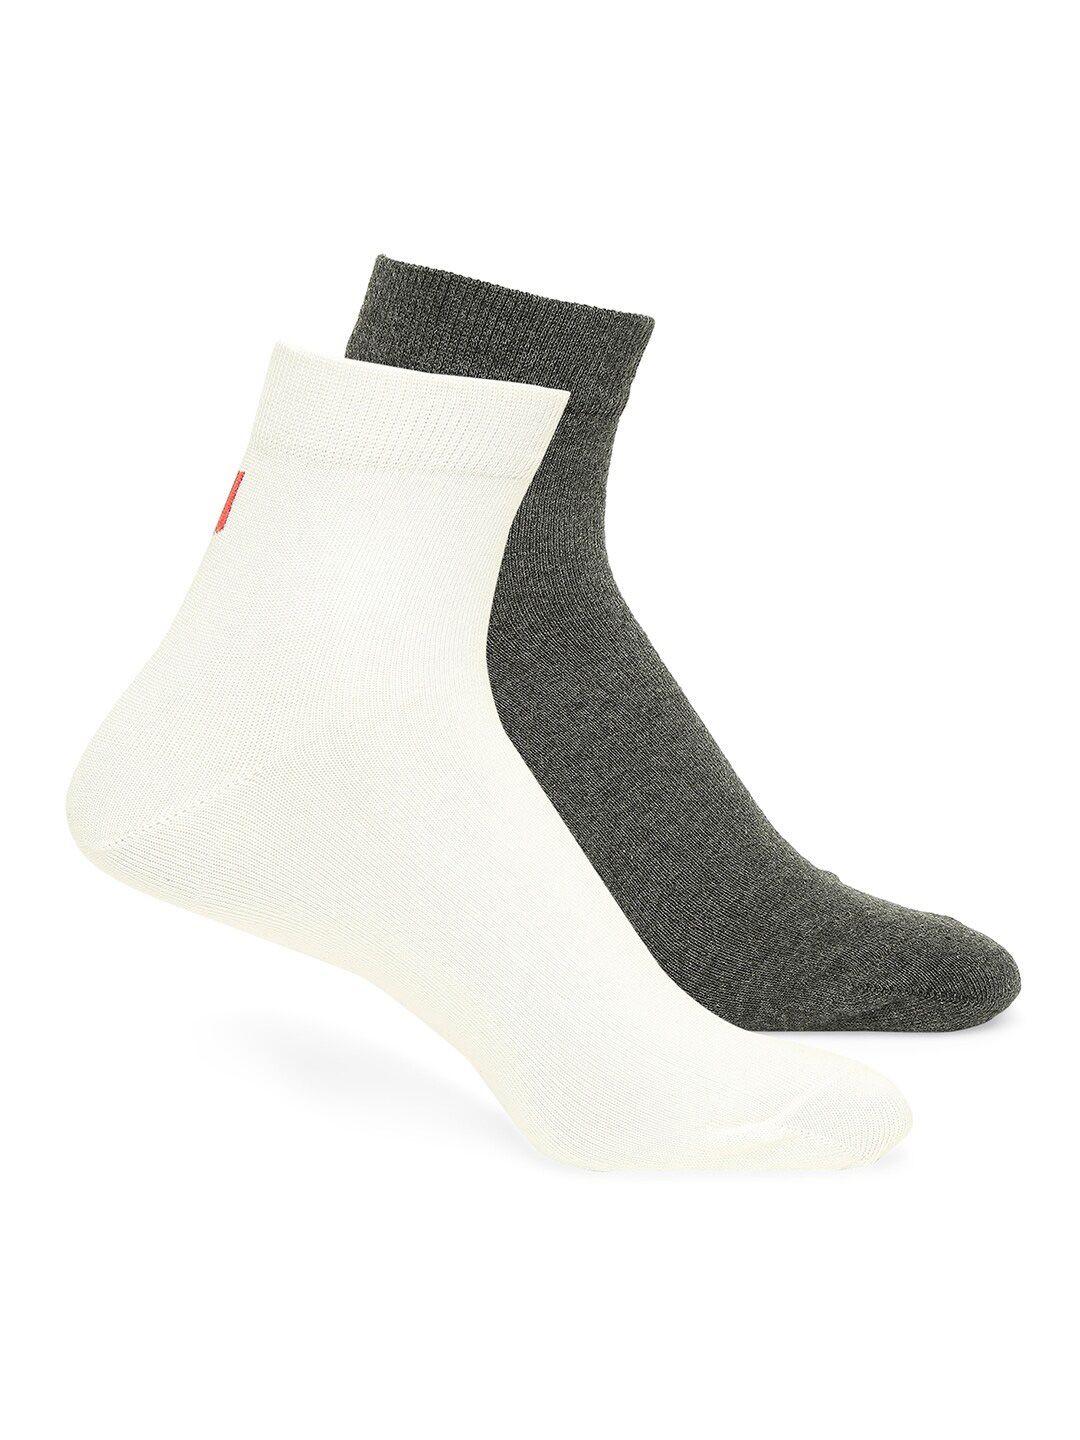 underjeans by spykar men pack of 2 ankle length cotton socks